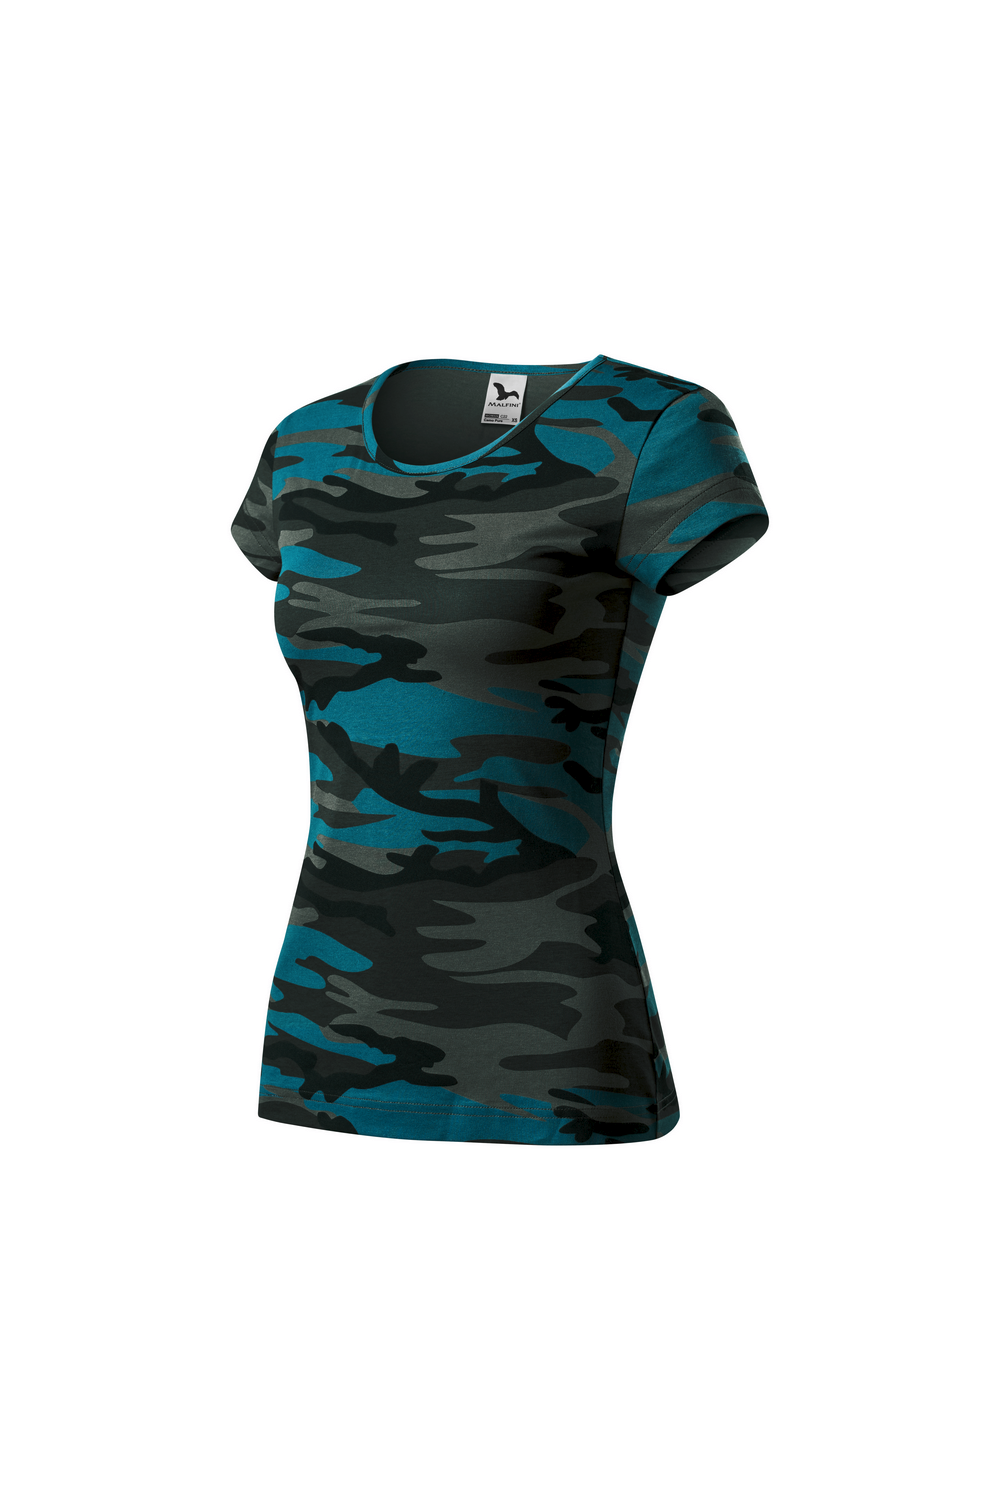 CAMO PURE C22 MALFINI Koszulka damska 100% bawełna t-shirt camouflage petrol